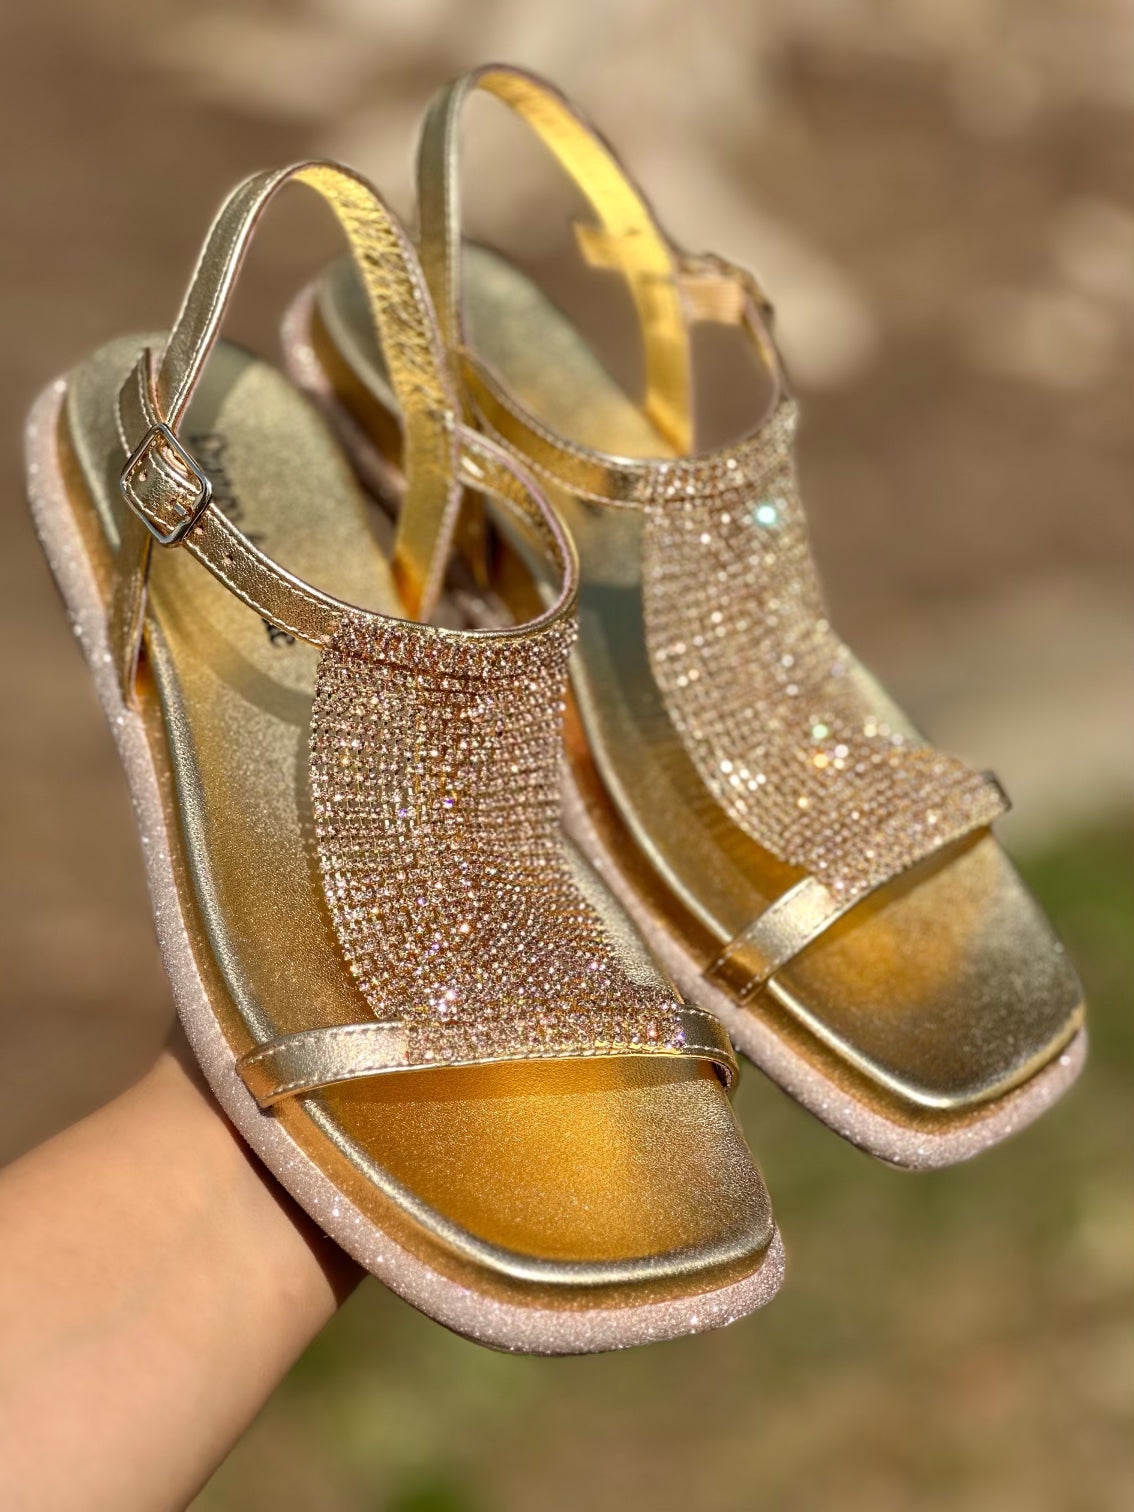 Django & Juliette Yerrys Gold Leather Sandals